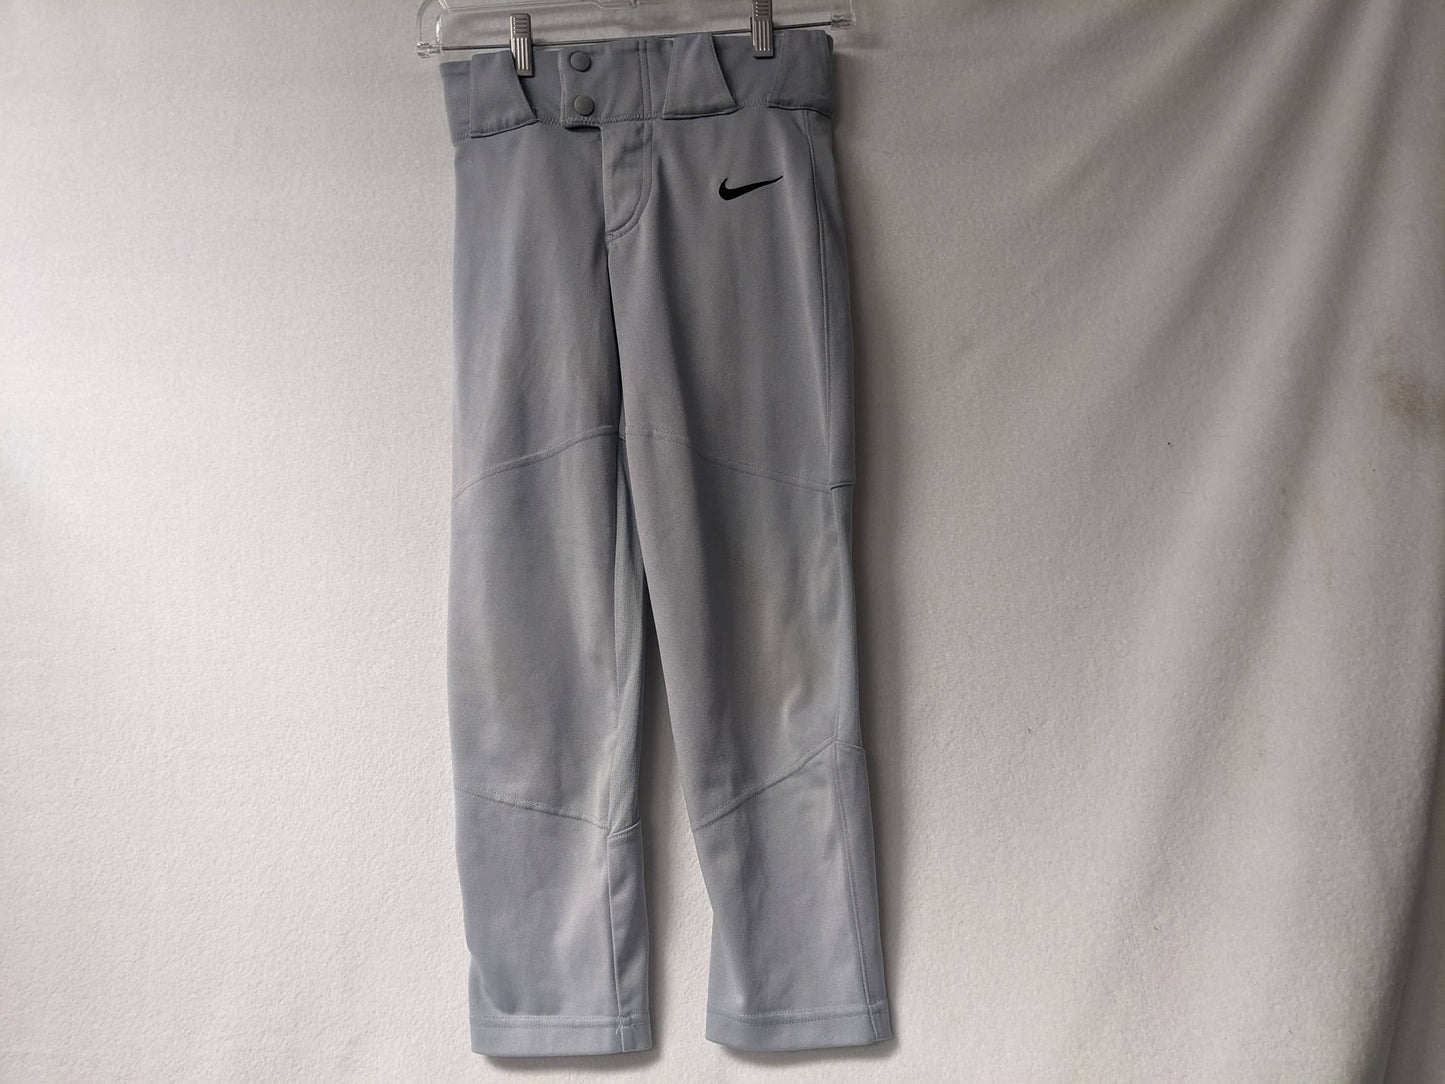 Nike Baseball Pants Size Small Color Gray Condition Used